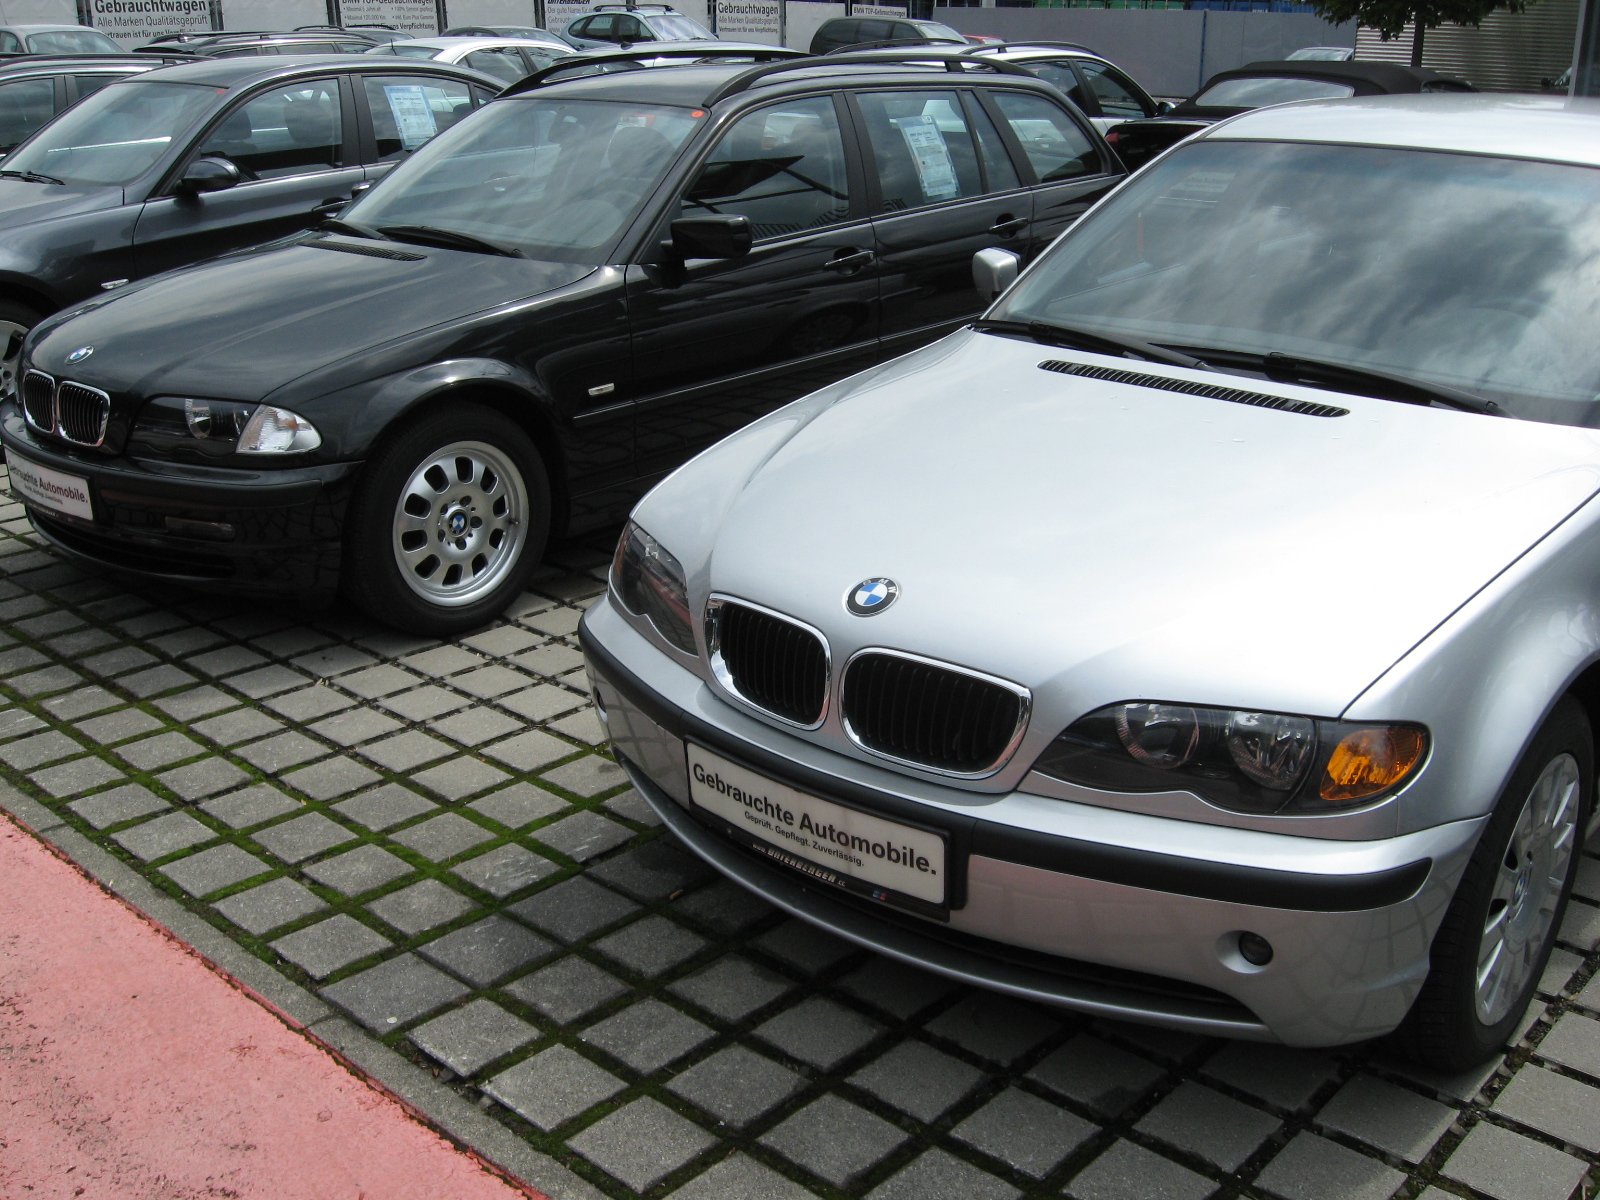 BMW 3 Series (E46) - Wikipedia